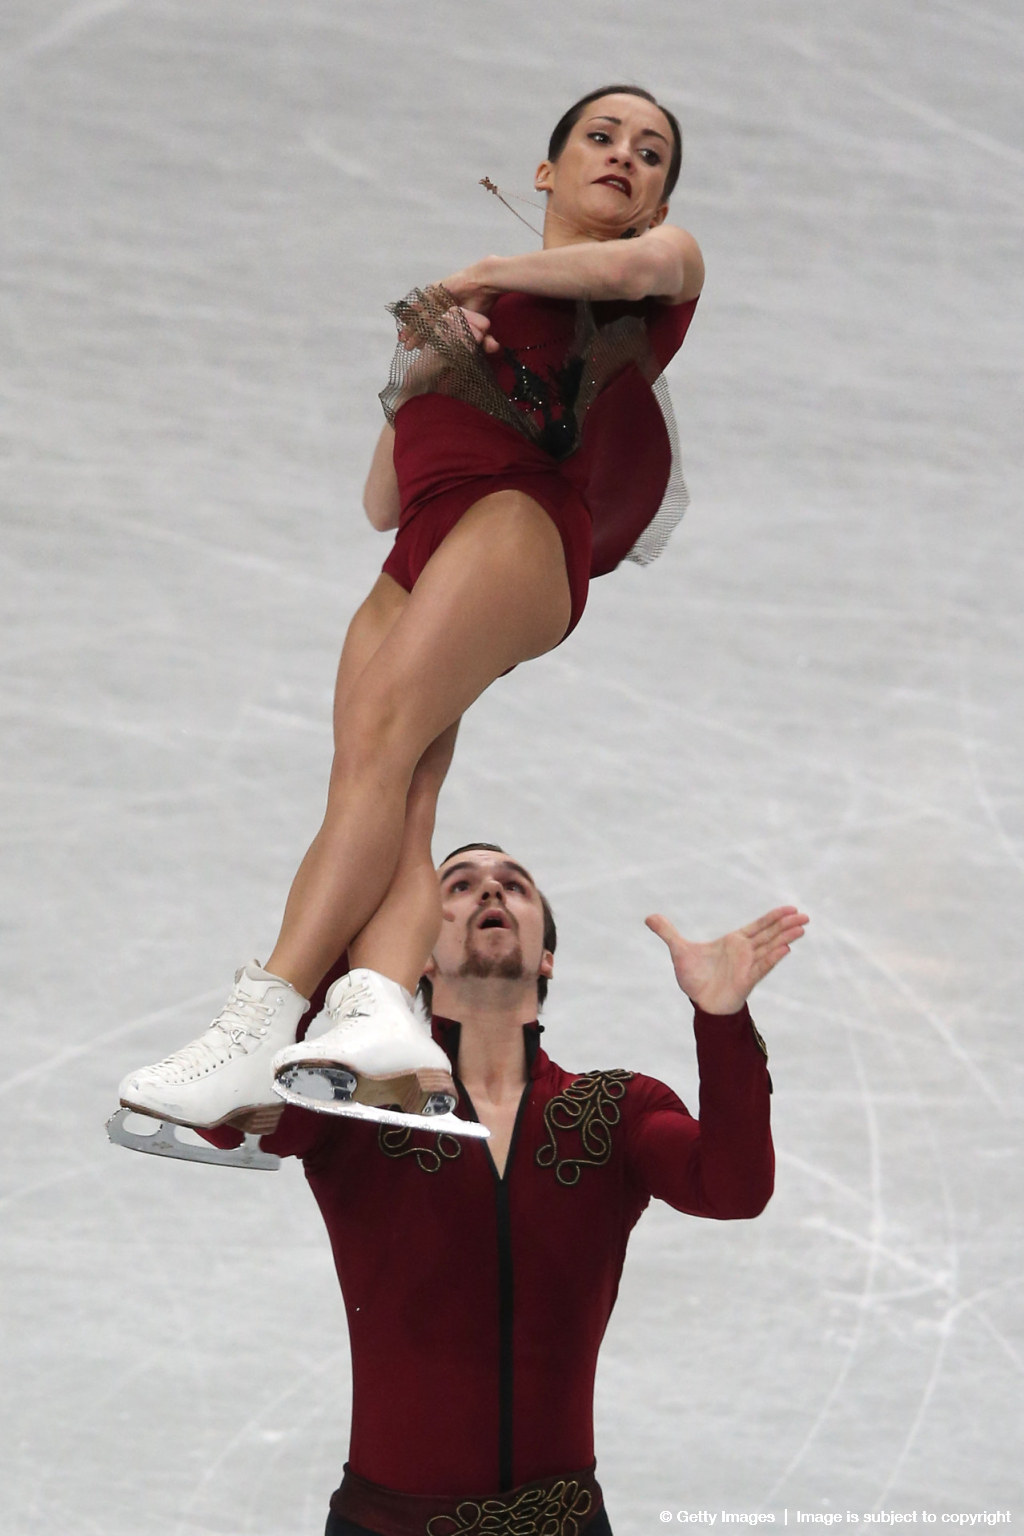 ISU World Figure Skating Championships 2014 — DAY 1